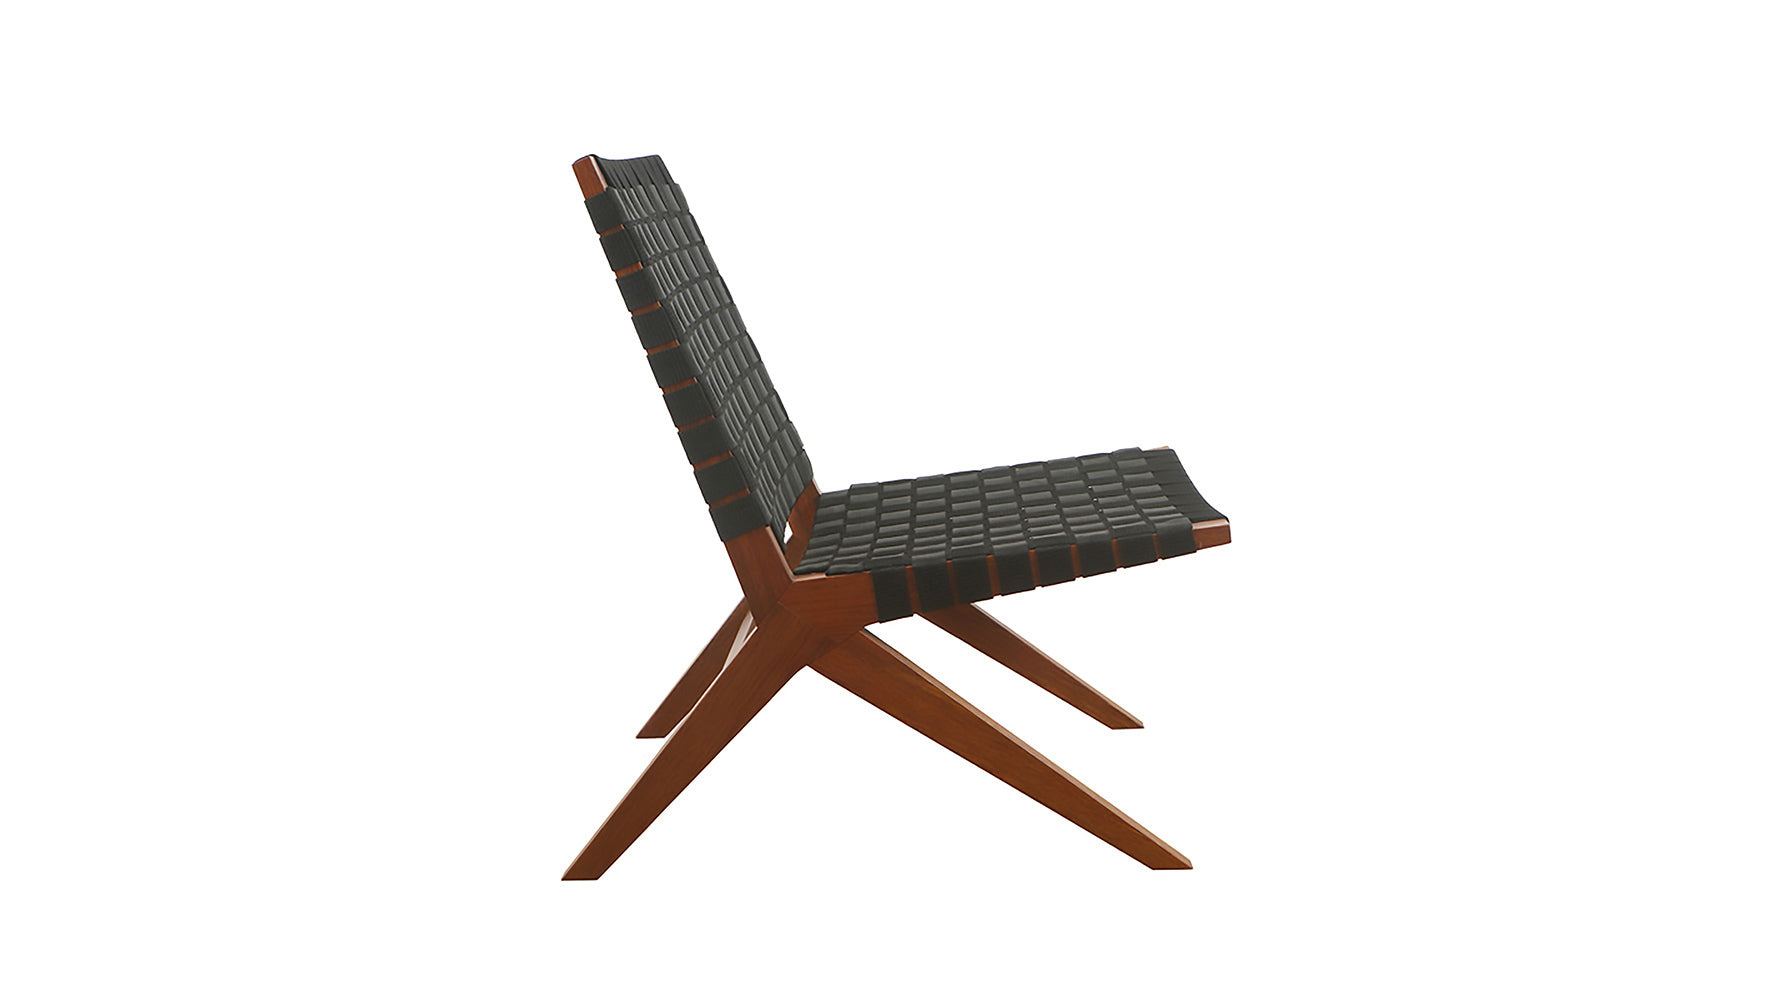 Endless Summer Outdoor Lounge Chair, Black Weave/Teak - Image 5